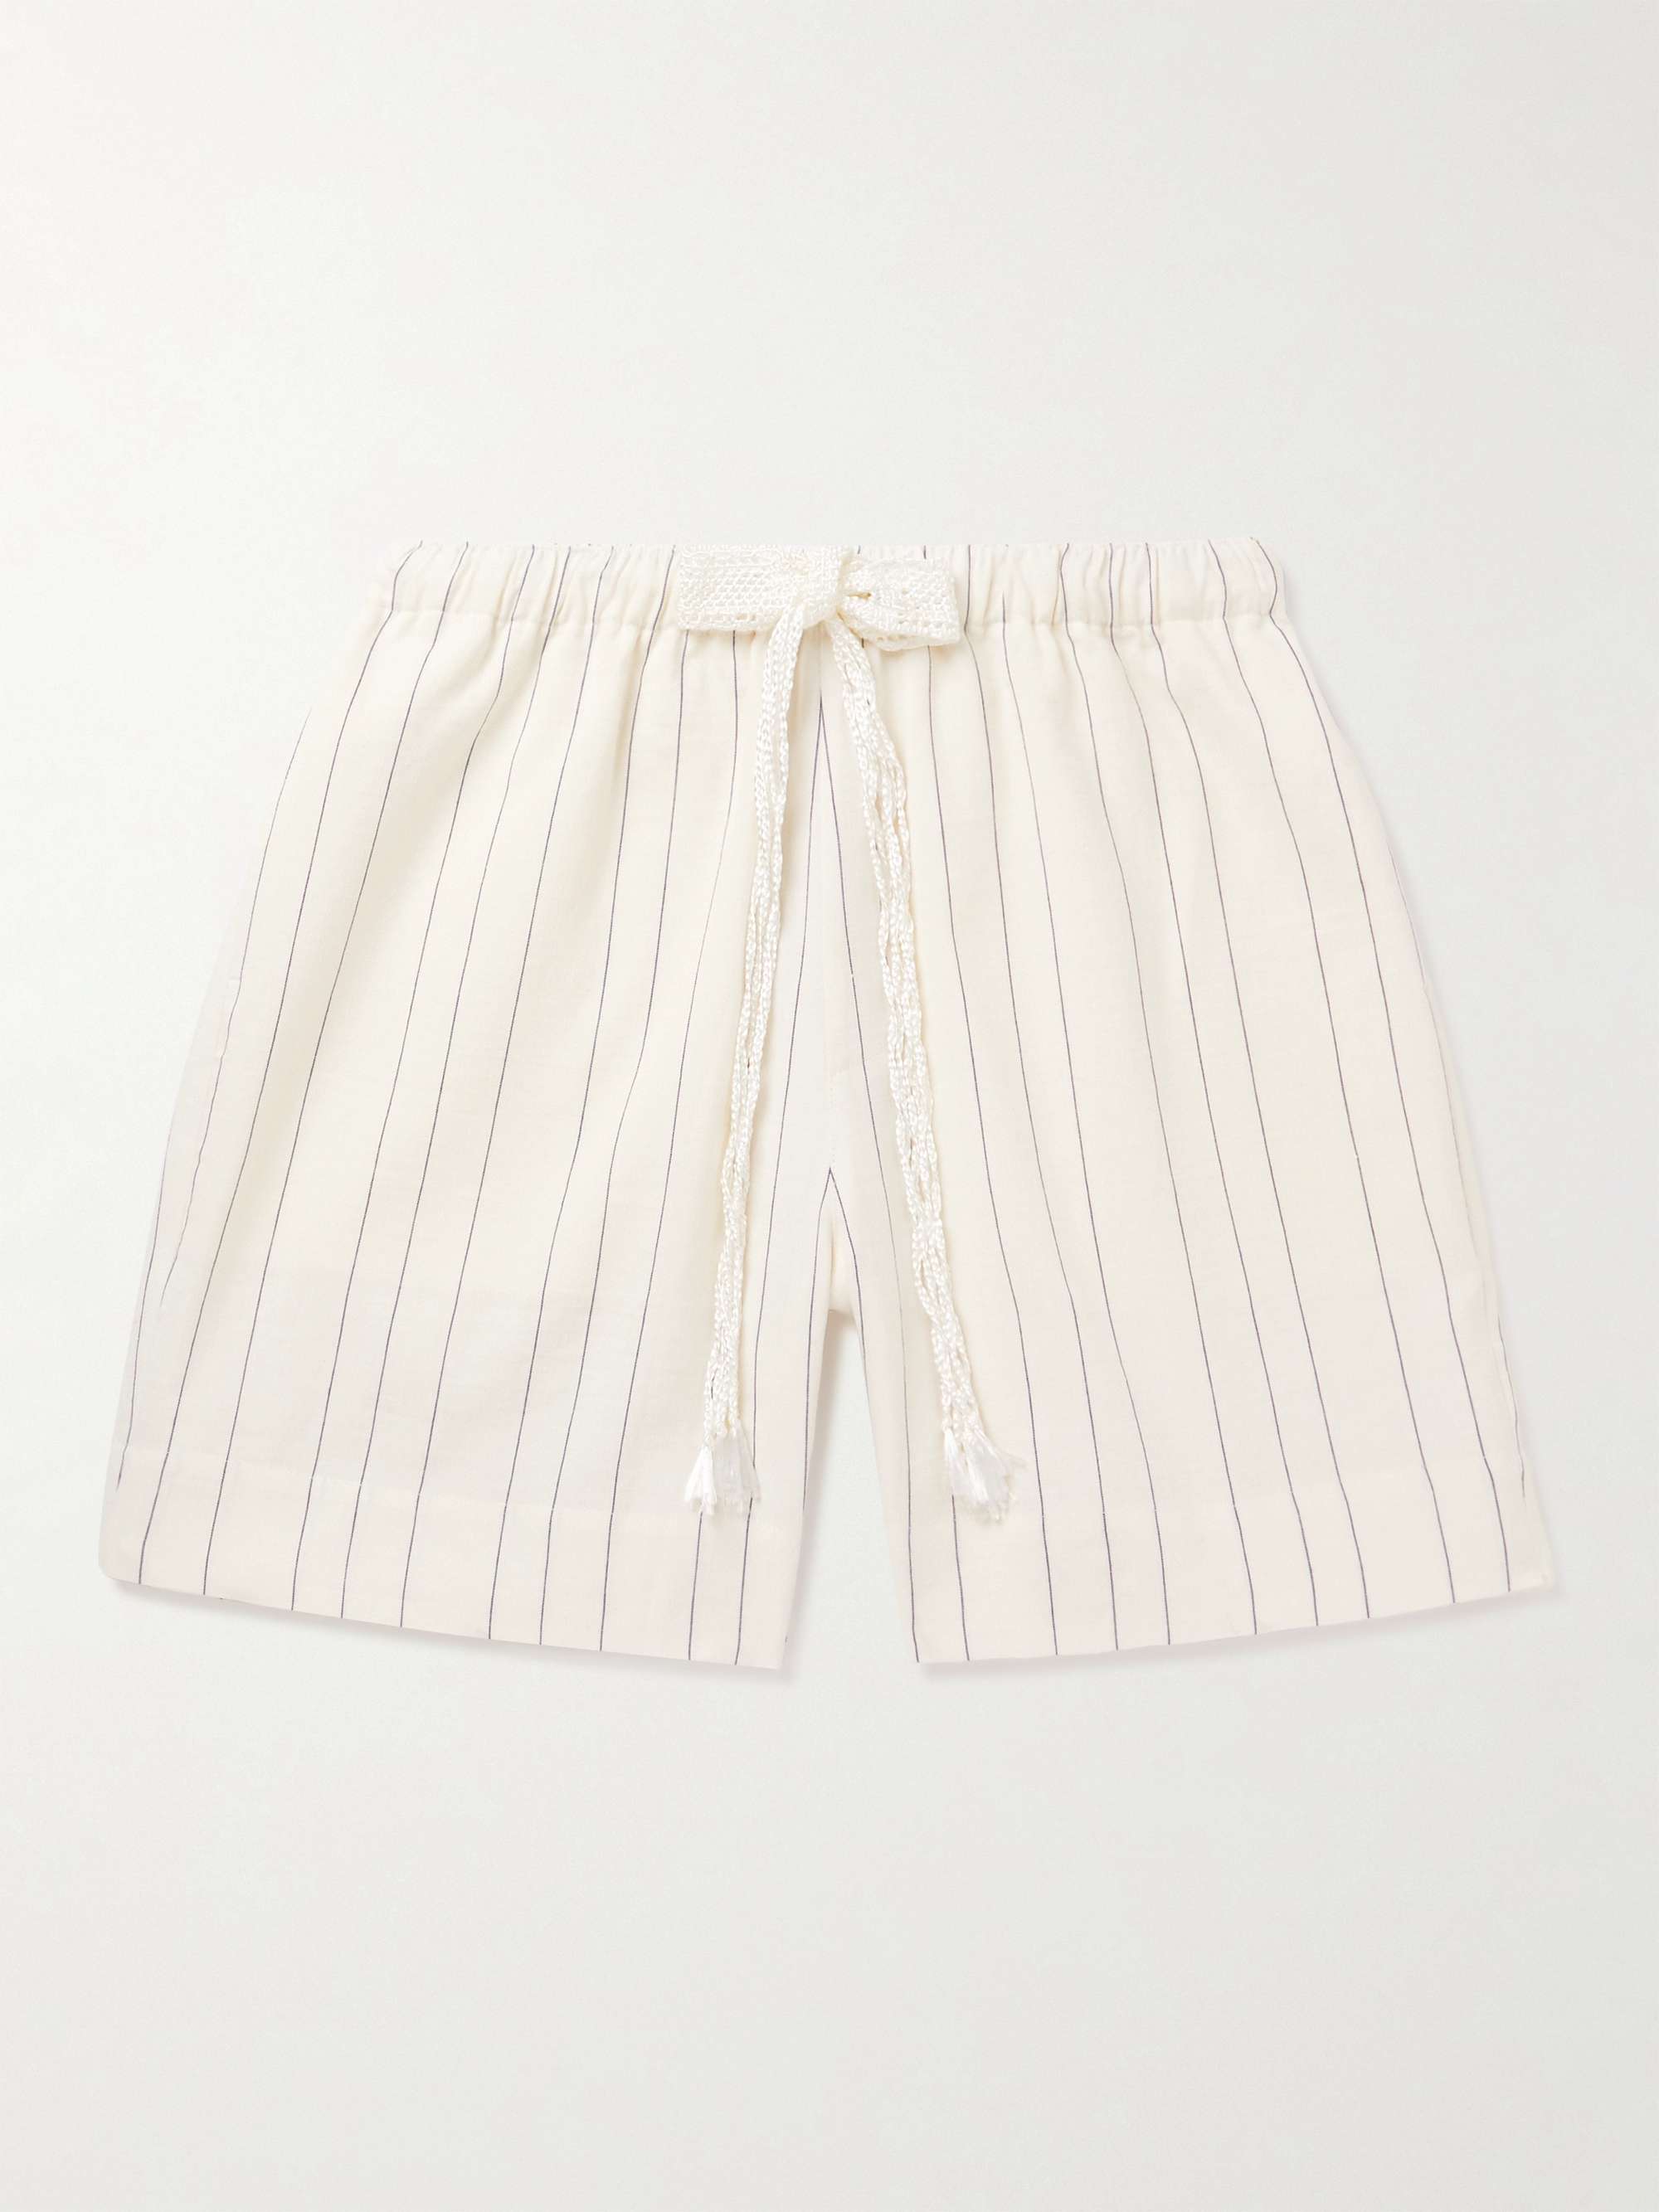 WALES BONNER Straight-Leg Striped Linen and Cotton-Blend Drawstring Shorts